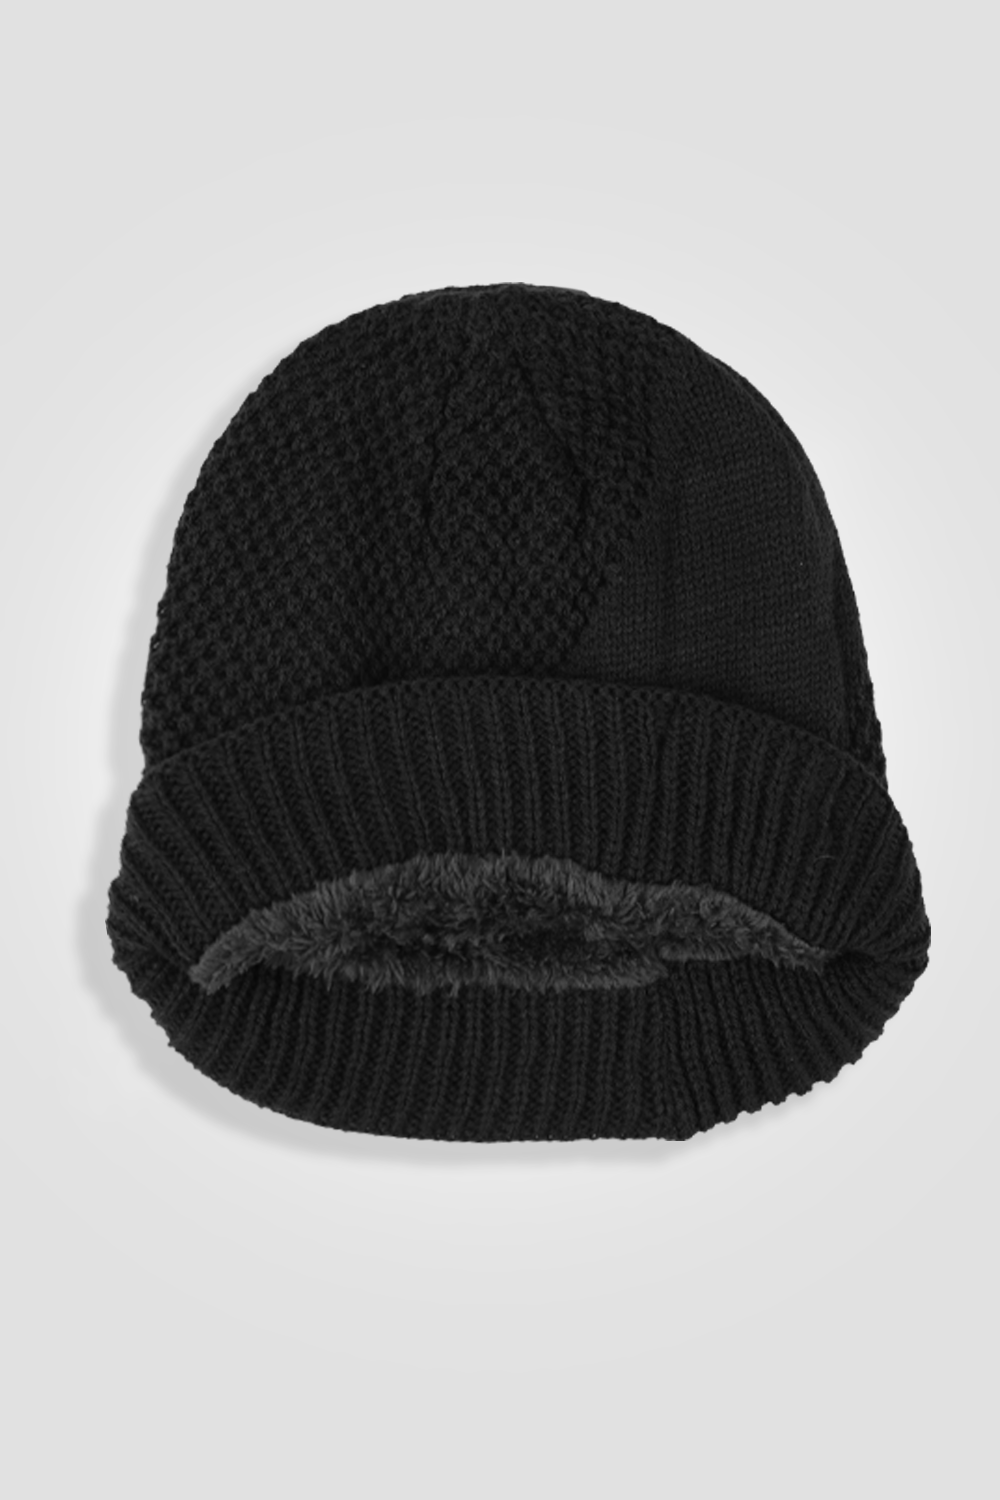 KENNETH COLE - כובע גרב לגבר בצבע שחור - MASHBIR//365